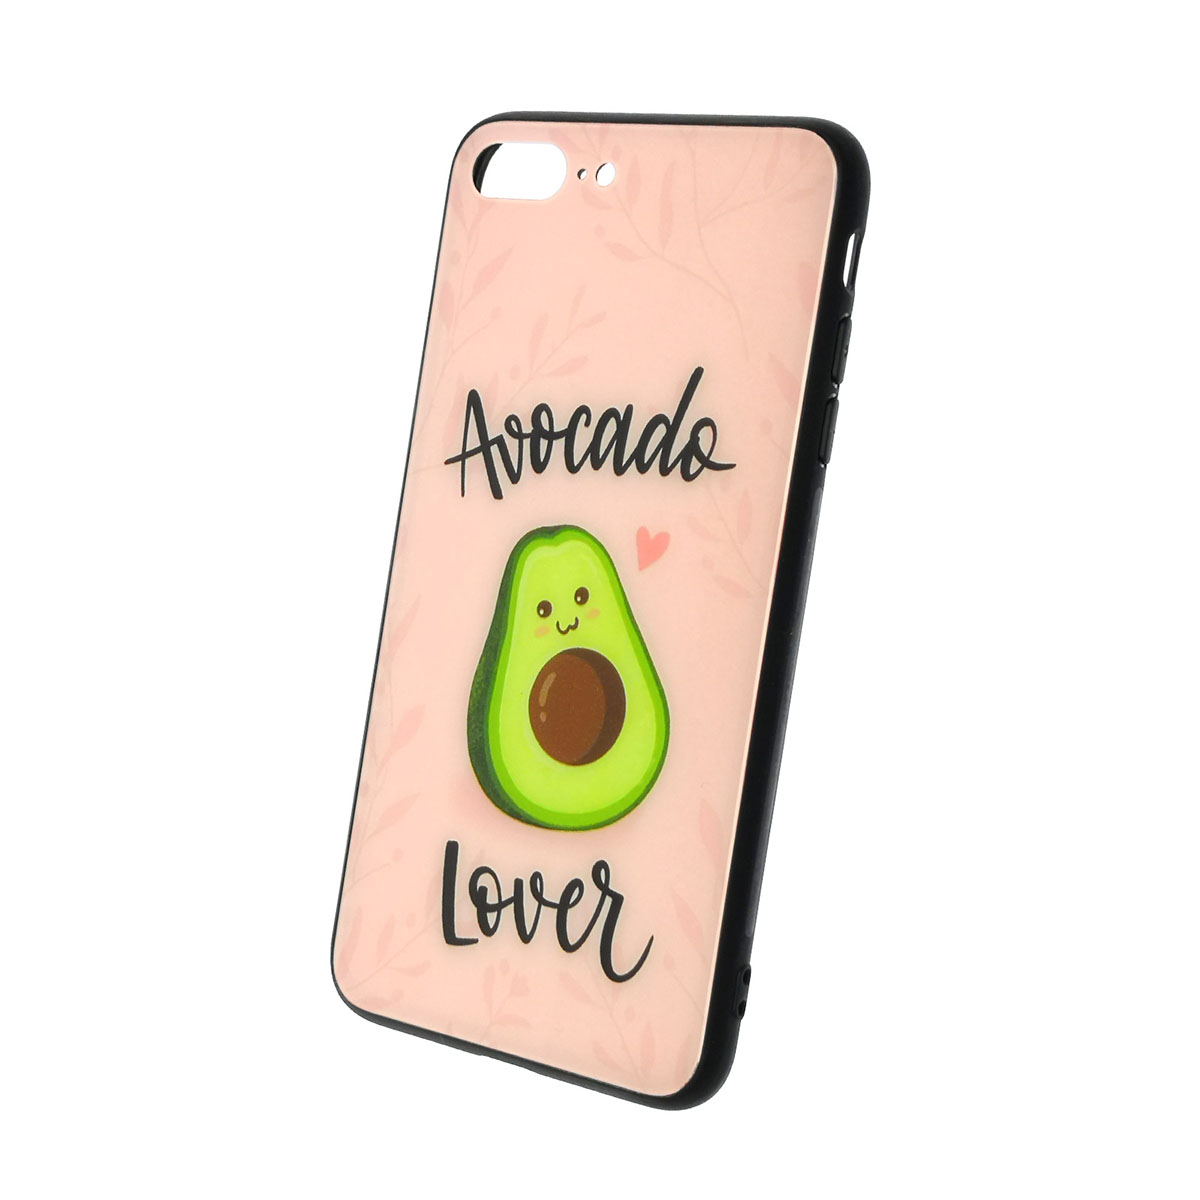 Чехол накладка для APPLE iPhone 7 Plus, iPhone 8 Plus, силикон, стекло, рисунок AVOCADO Lover.